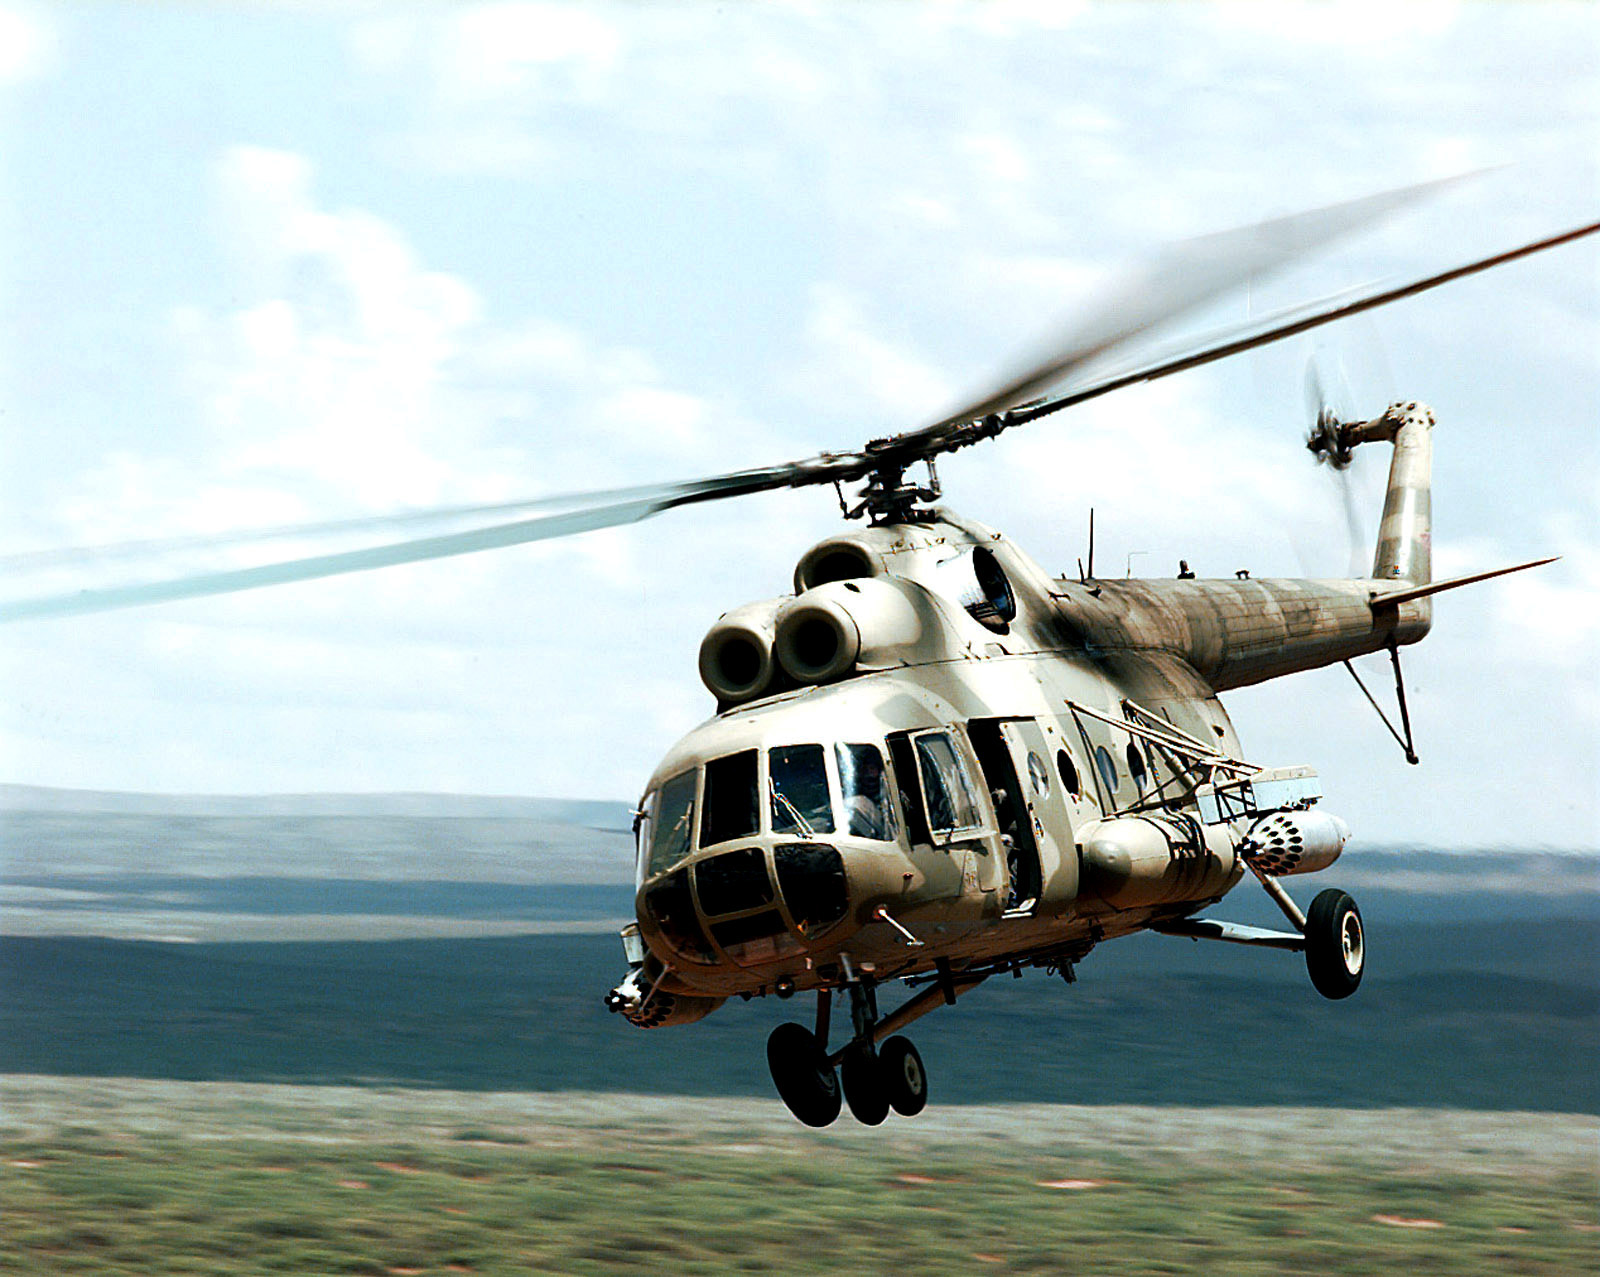 UPDATE 1-Six die in helicopter crash in Norway